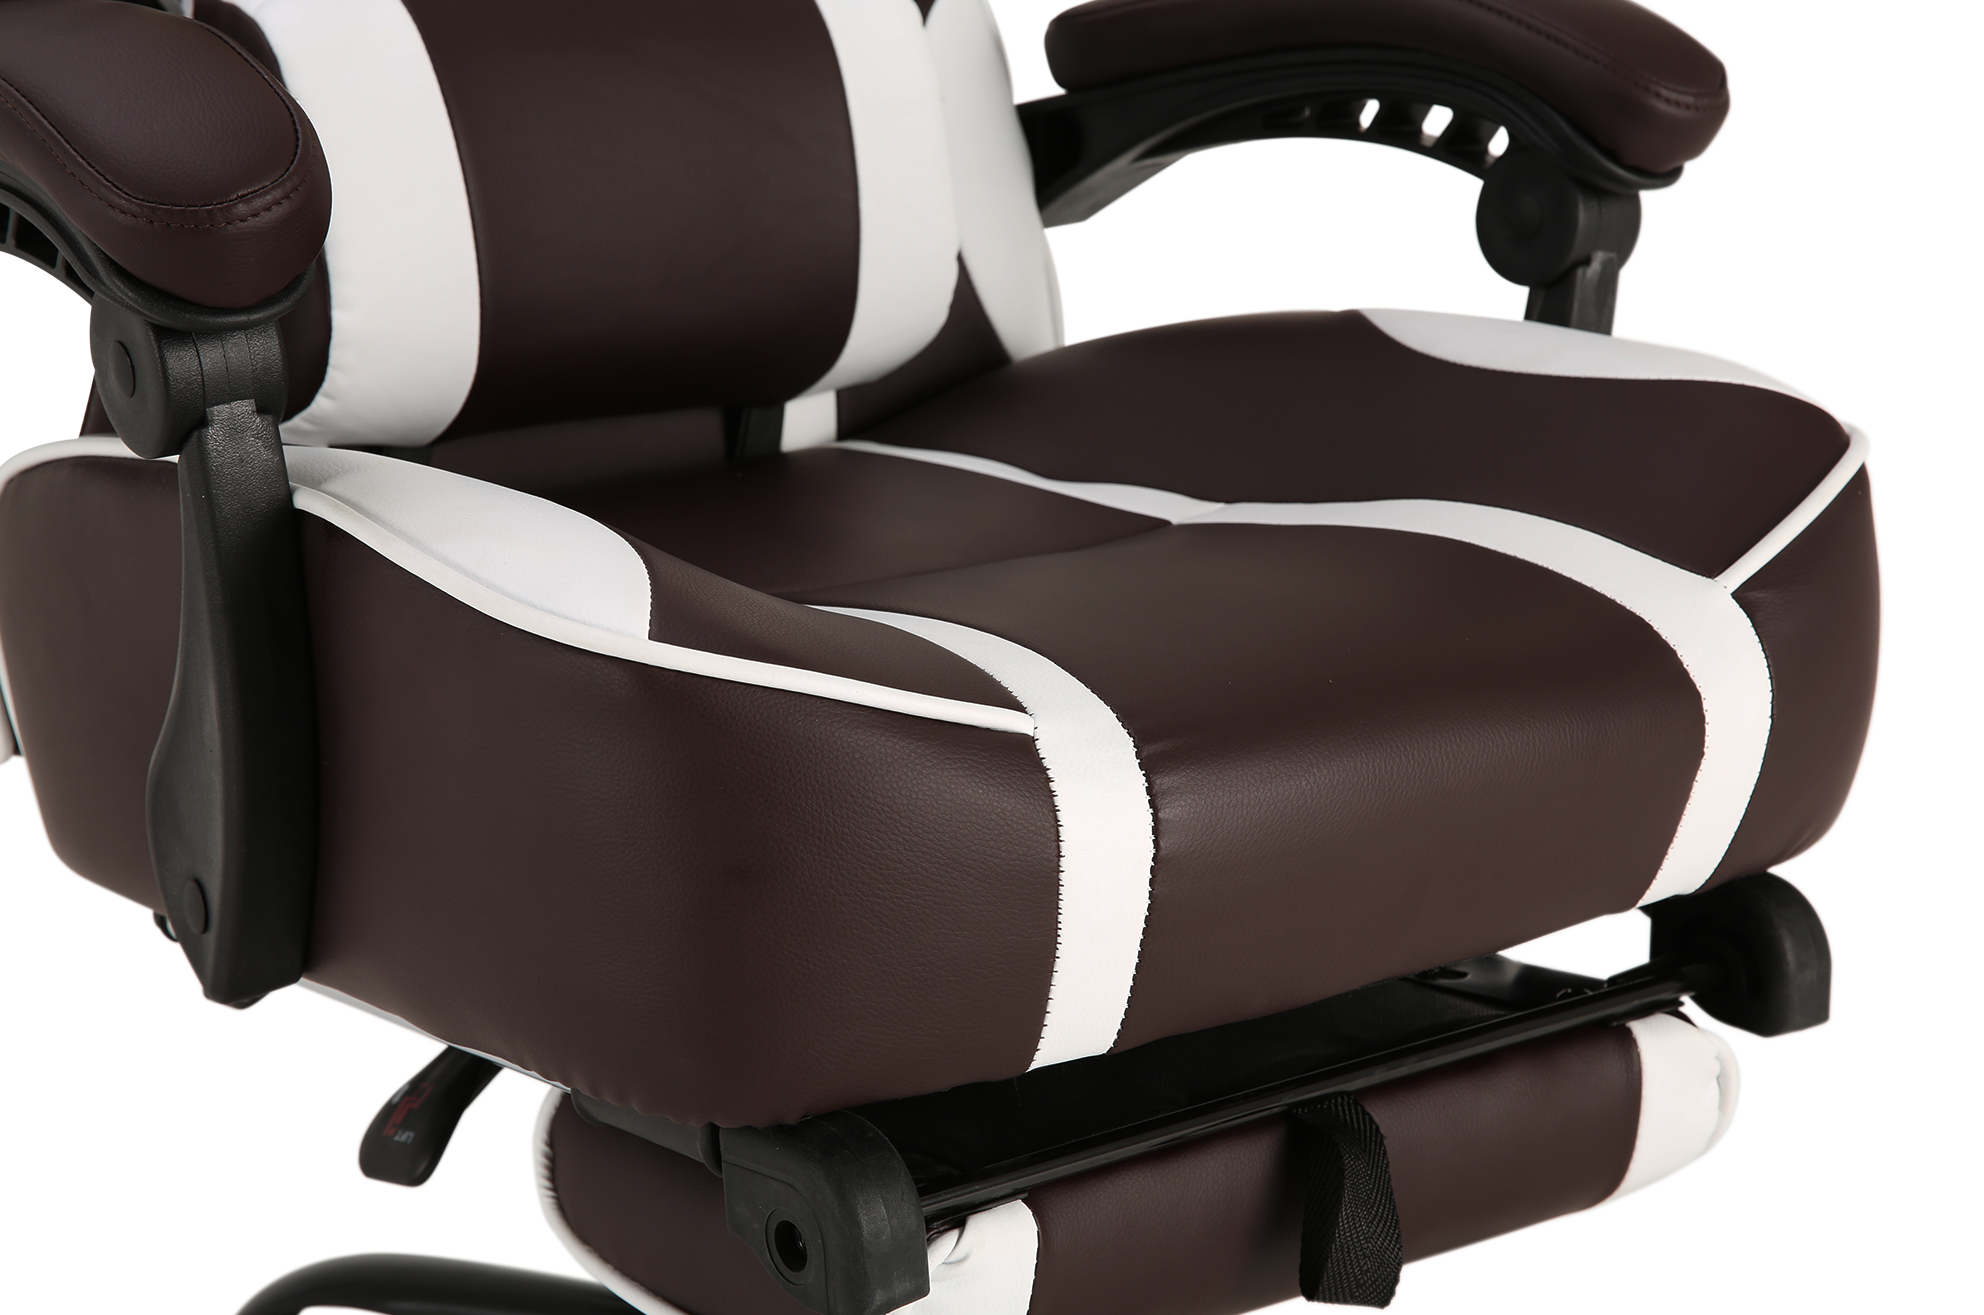 Геймерское кресло GT Racer коричневое с белым (X-2748 Dark Brown/White) - фото 7